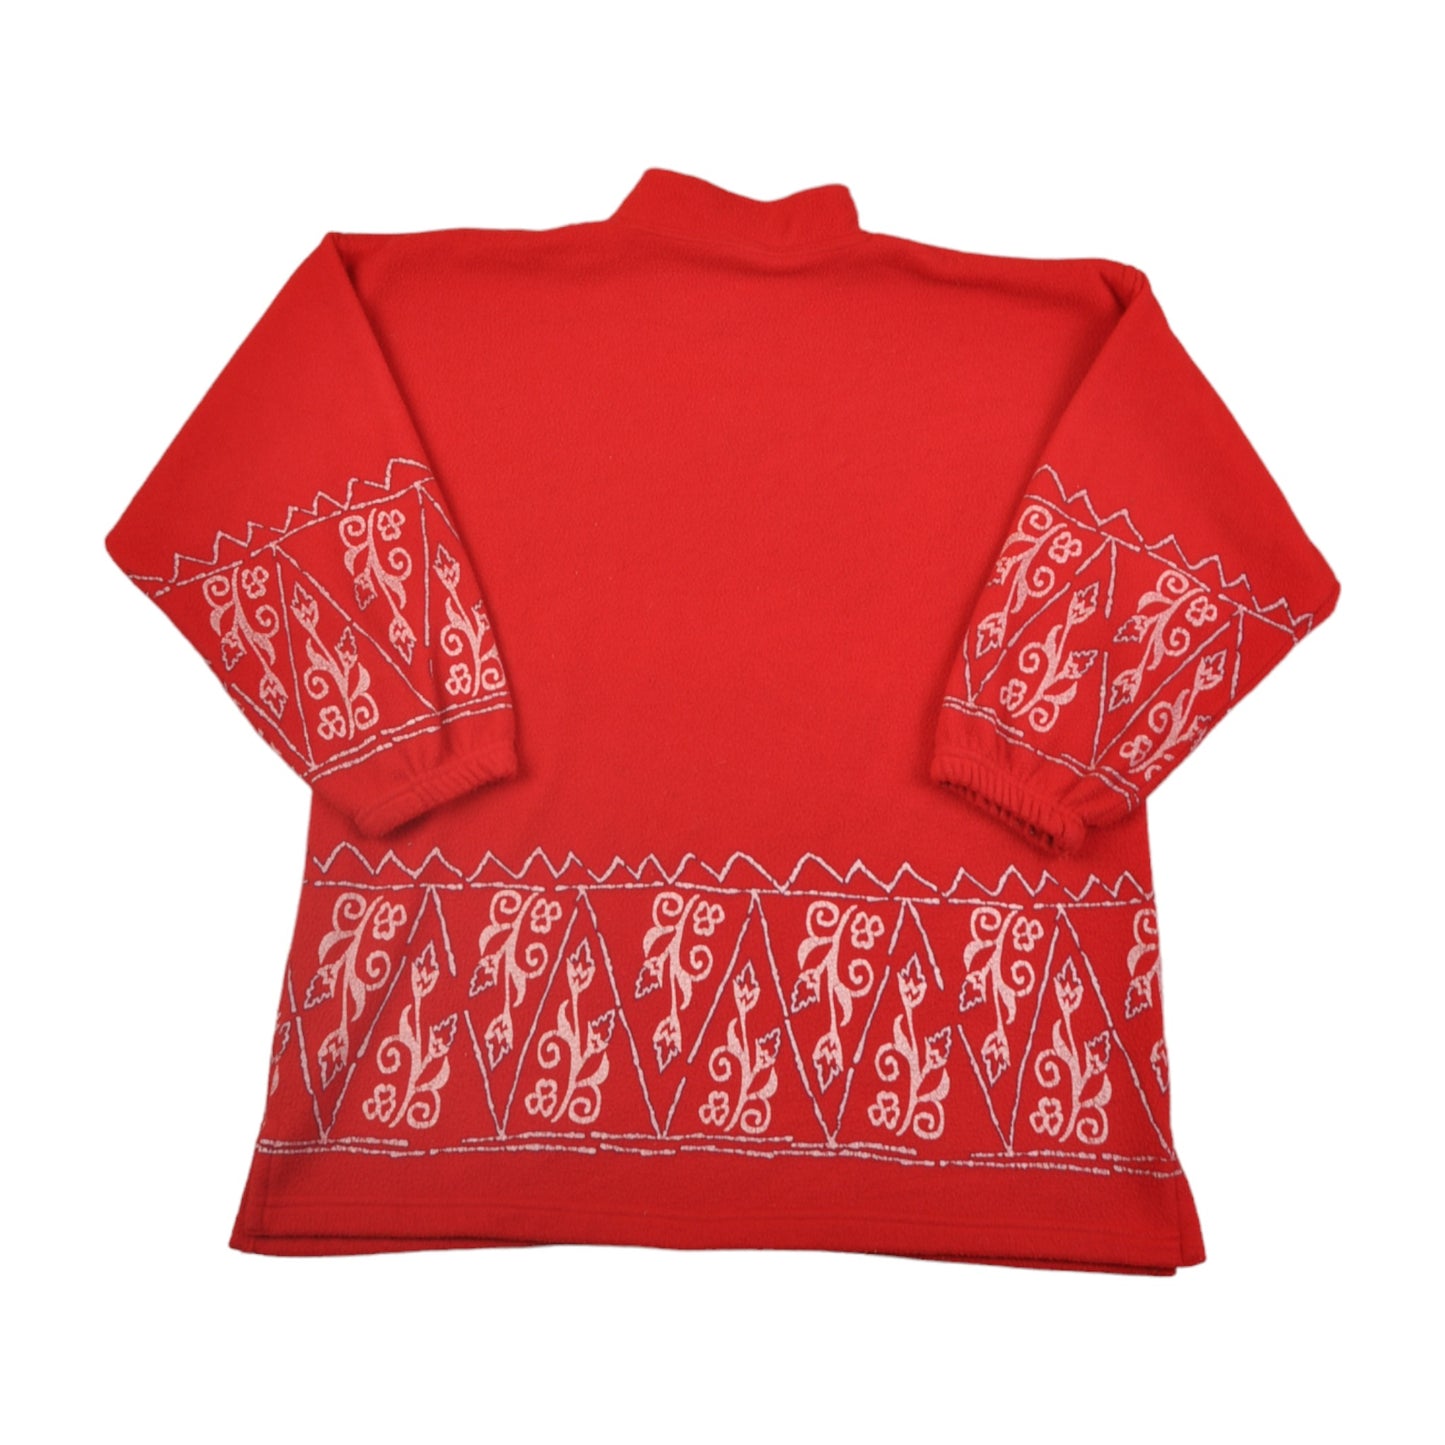 Vintage Fleece 1/4 Zip Retro Pattern Red Ladies Large